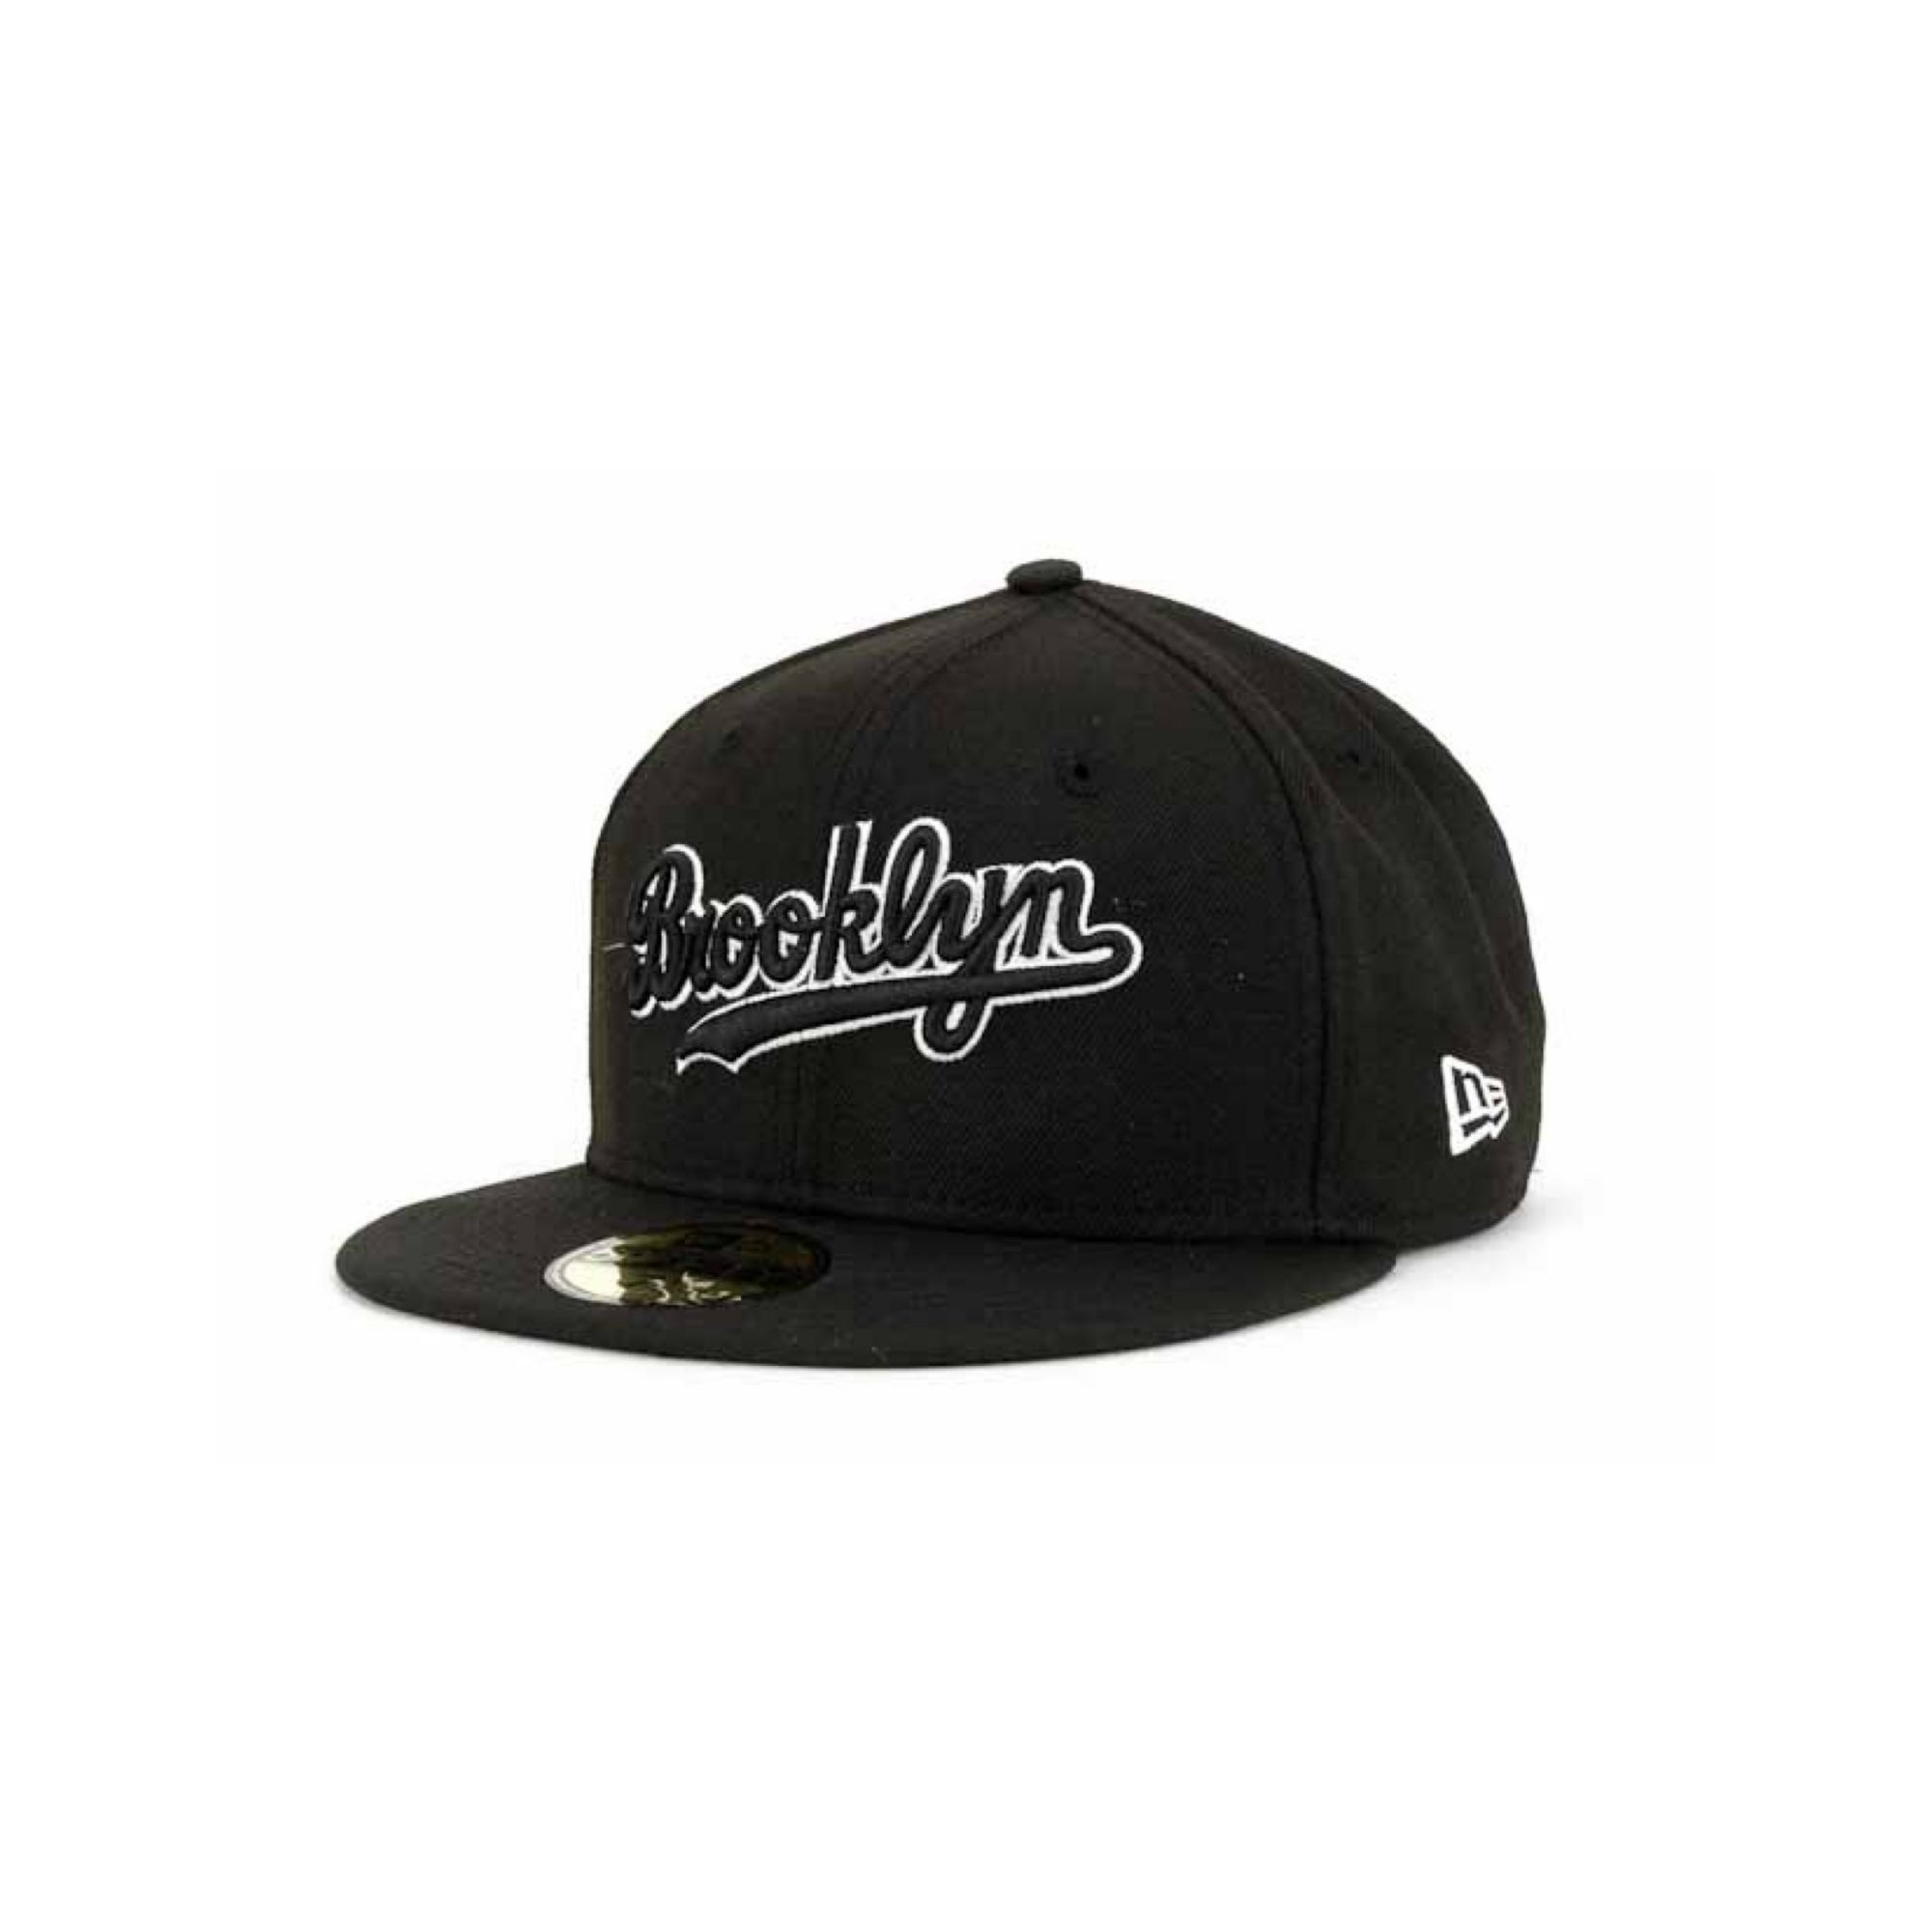 New Era Brooklyn Dodgers Black And White Fashion 59Fifty Cap in Black ...